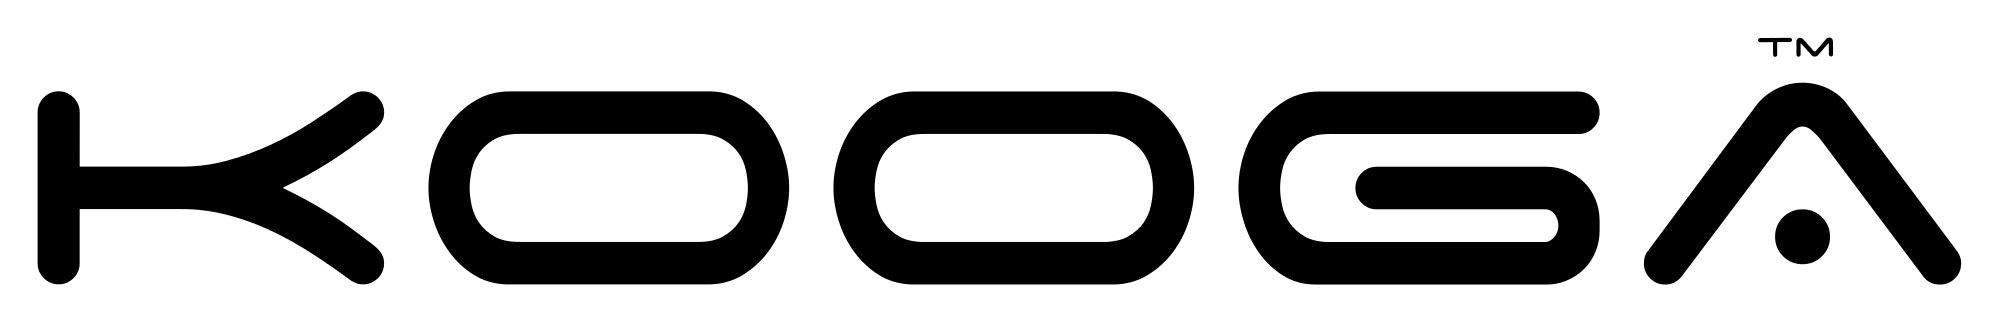 Kooga logo